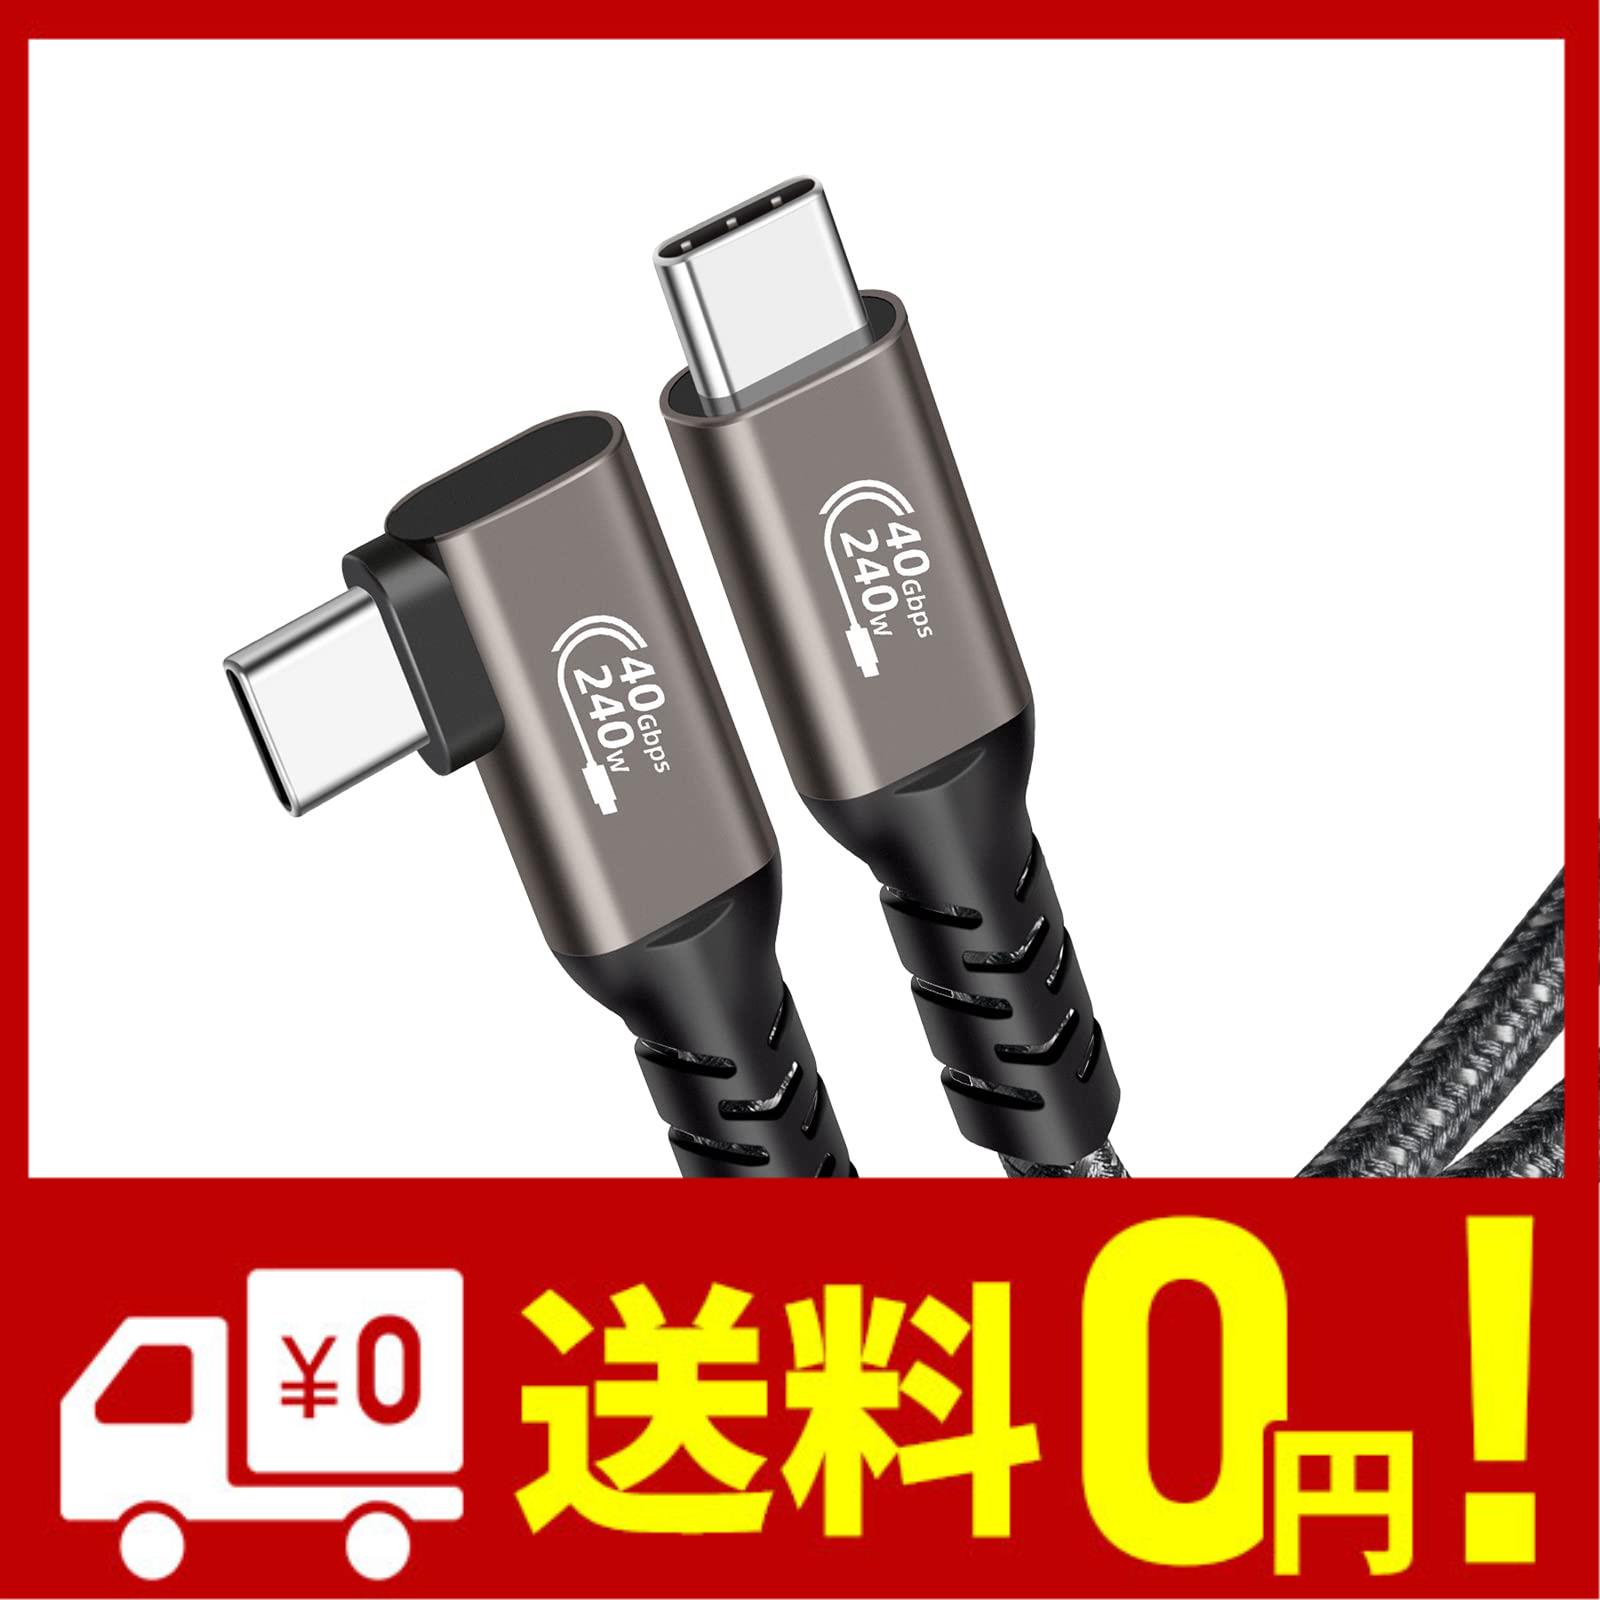 Thunderbolt 4 ケーブル 1m L字 ガン色 Popolier USB4対応 Popolier 240W出力 40Gbps高速データ転送 8K 4K USB 3.2 3.1 3.0 2